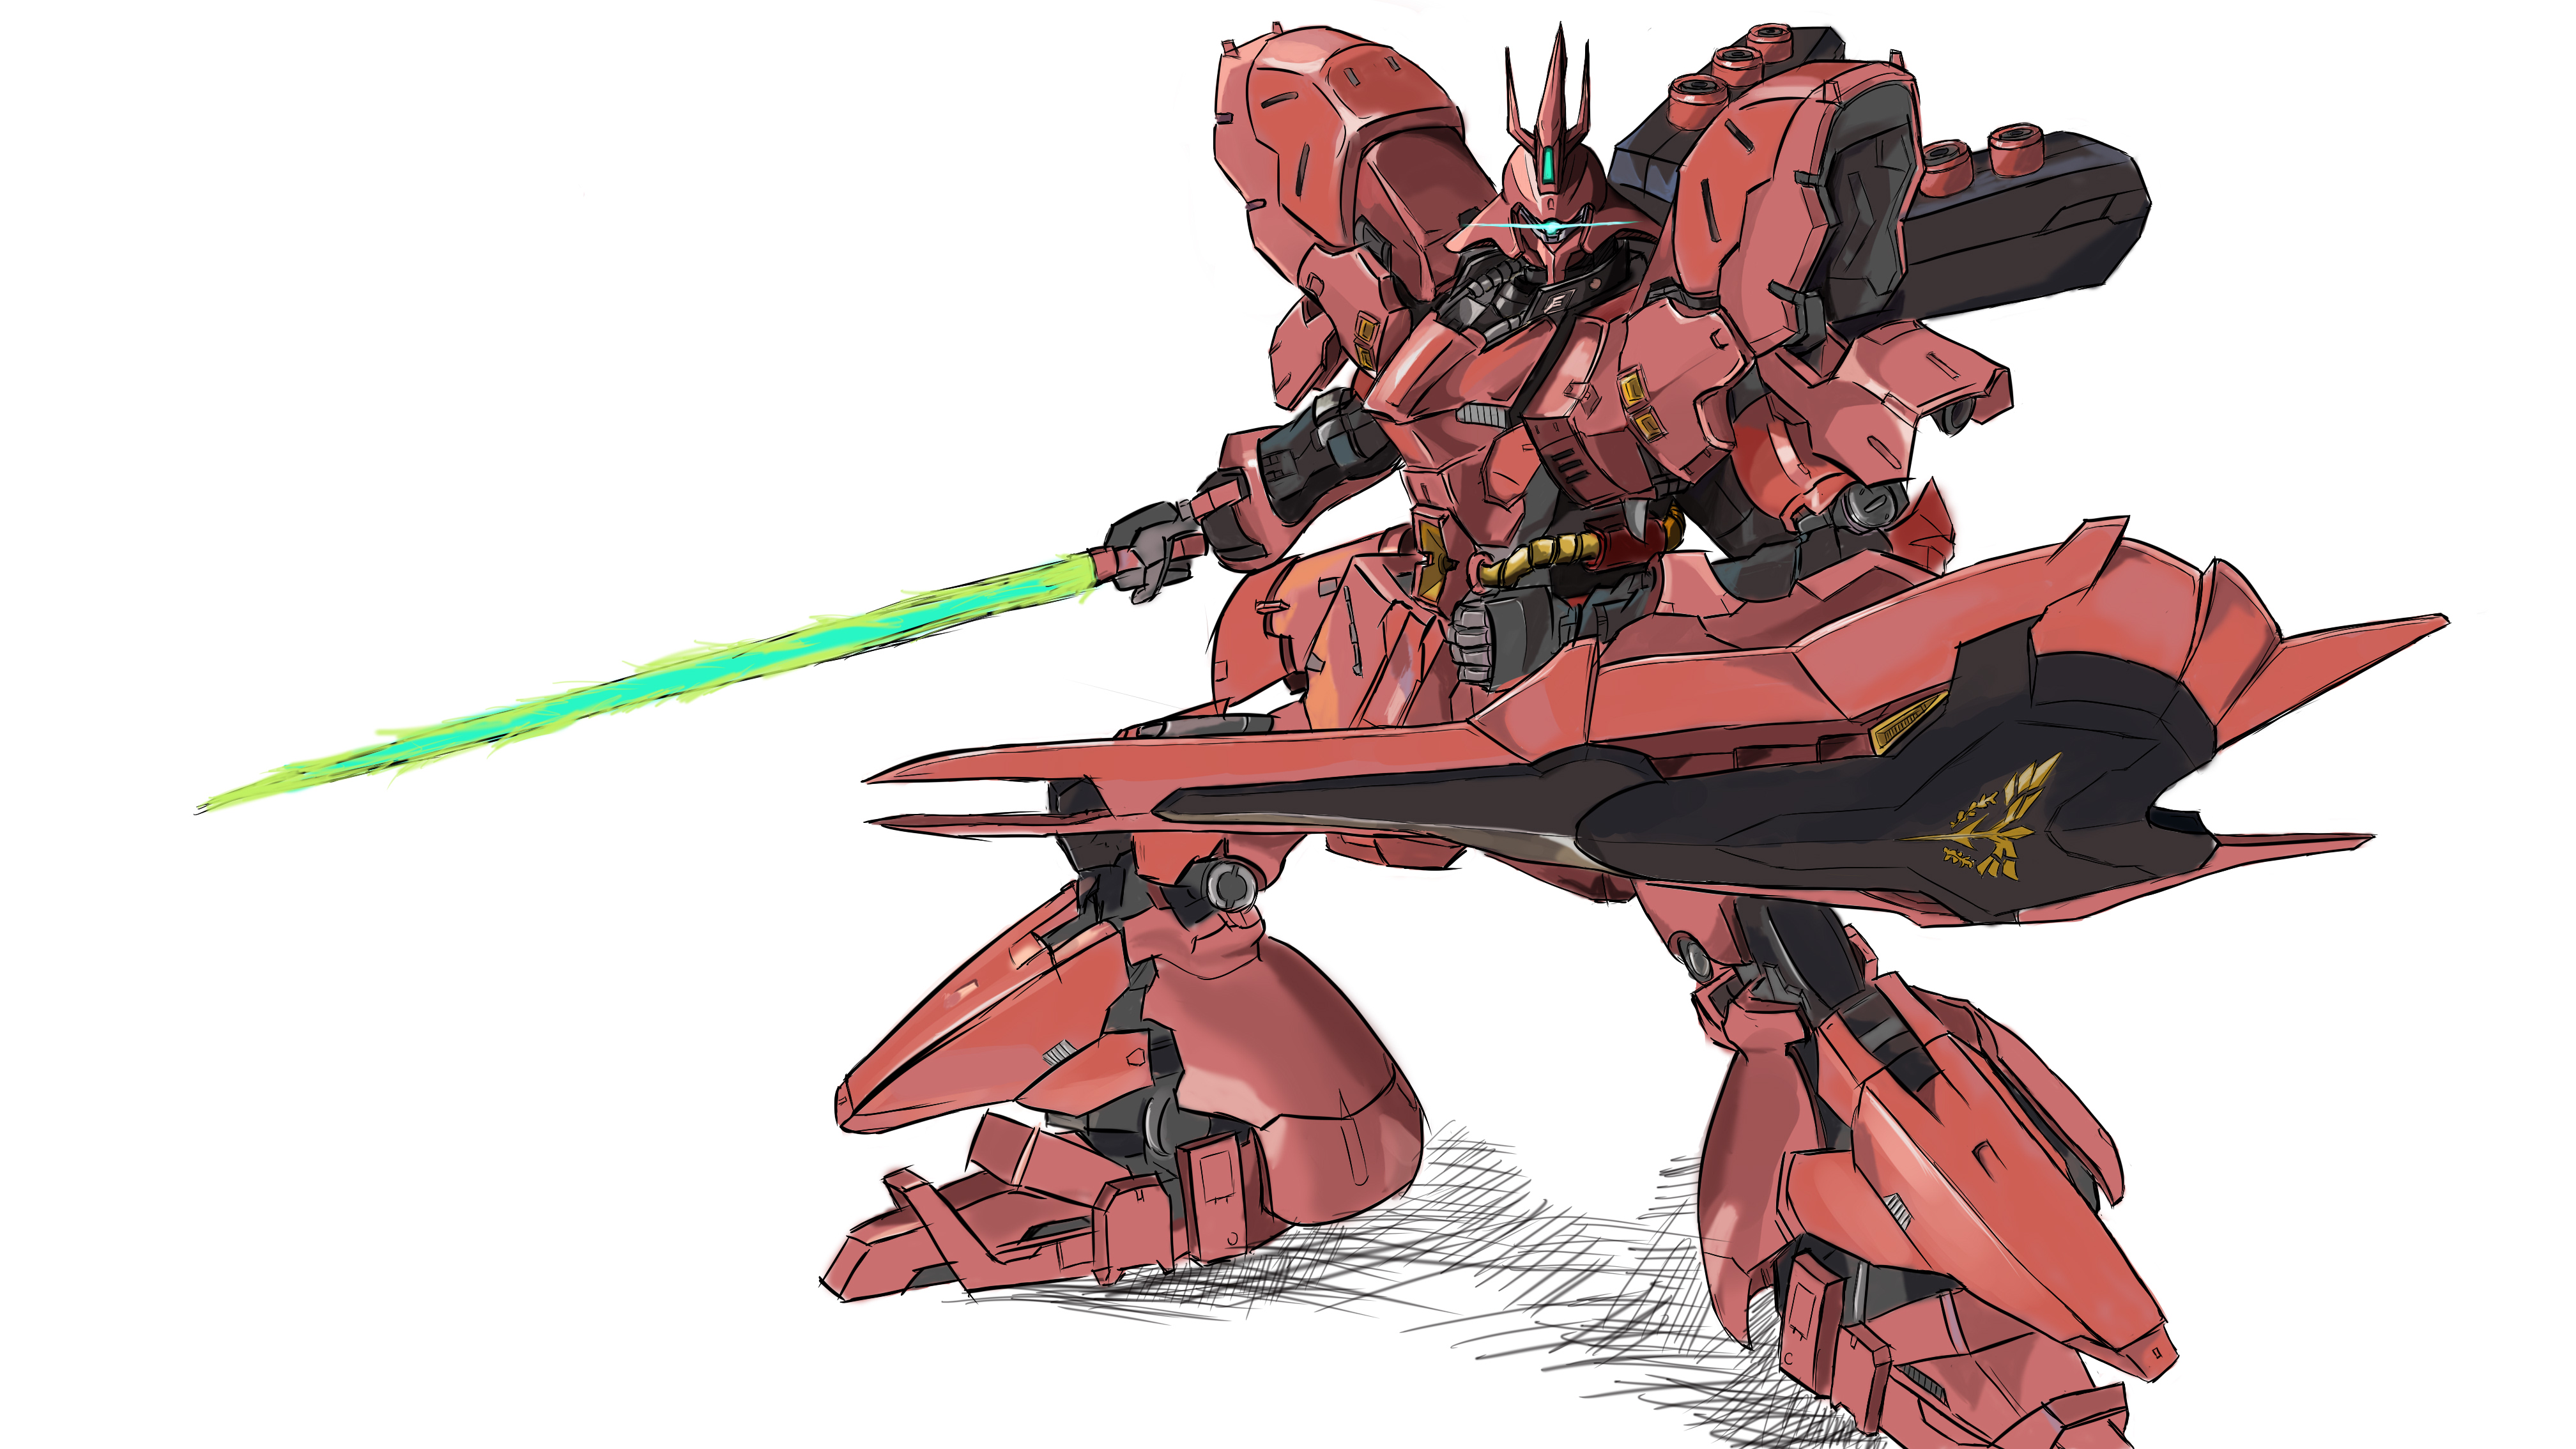 Anime Mech Mobile Suit Super Robot Wars Mobile Suit Gundam Chars Counterattack Sazabi Artwork Digita 4032x2268